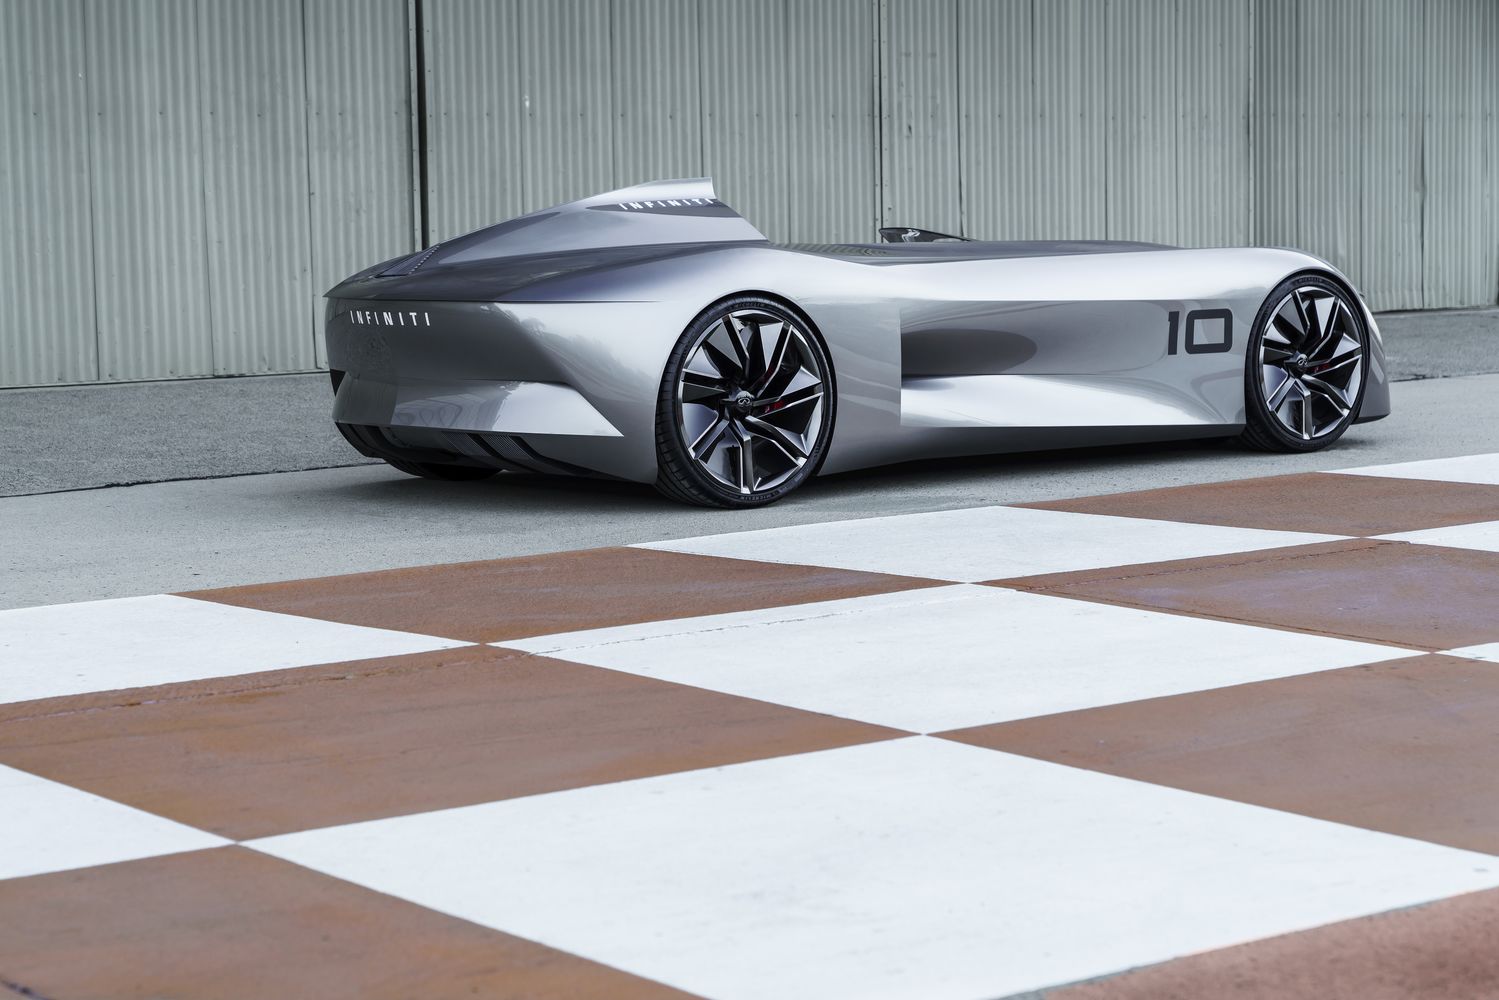 Infiniti's Prototype 10 concept blends futuristic long-range hybrid tech with a single-seat 'retro racer' design.